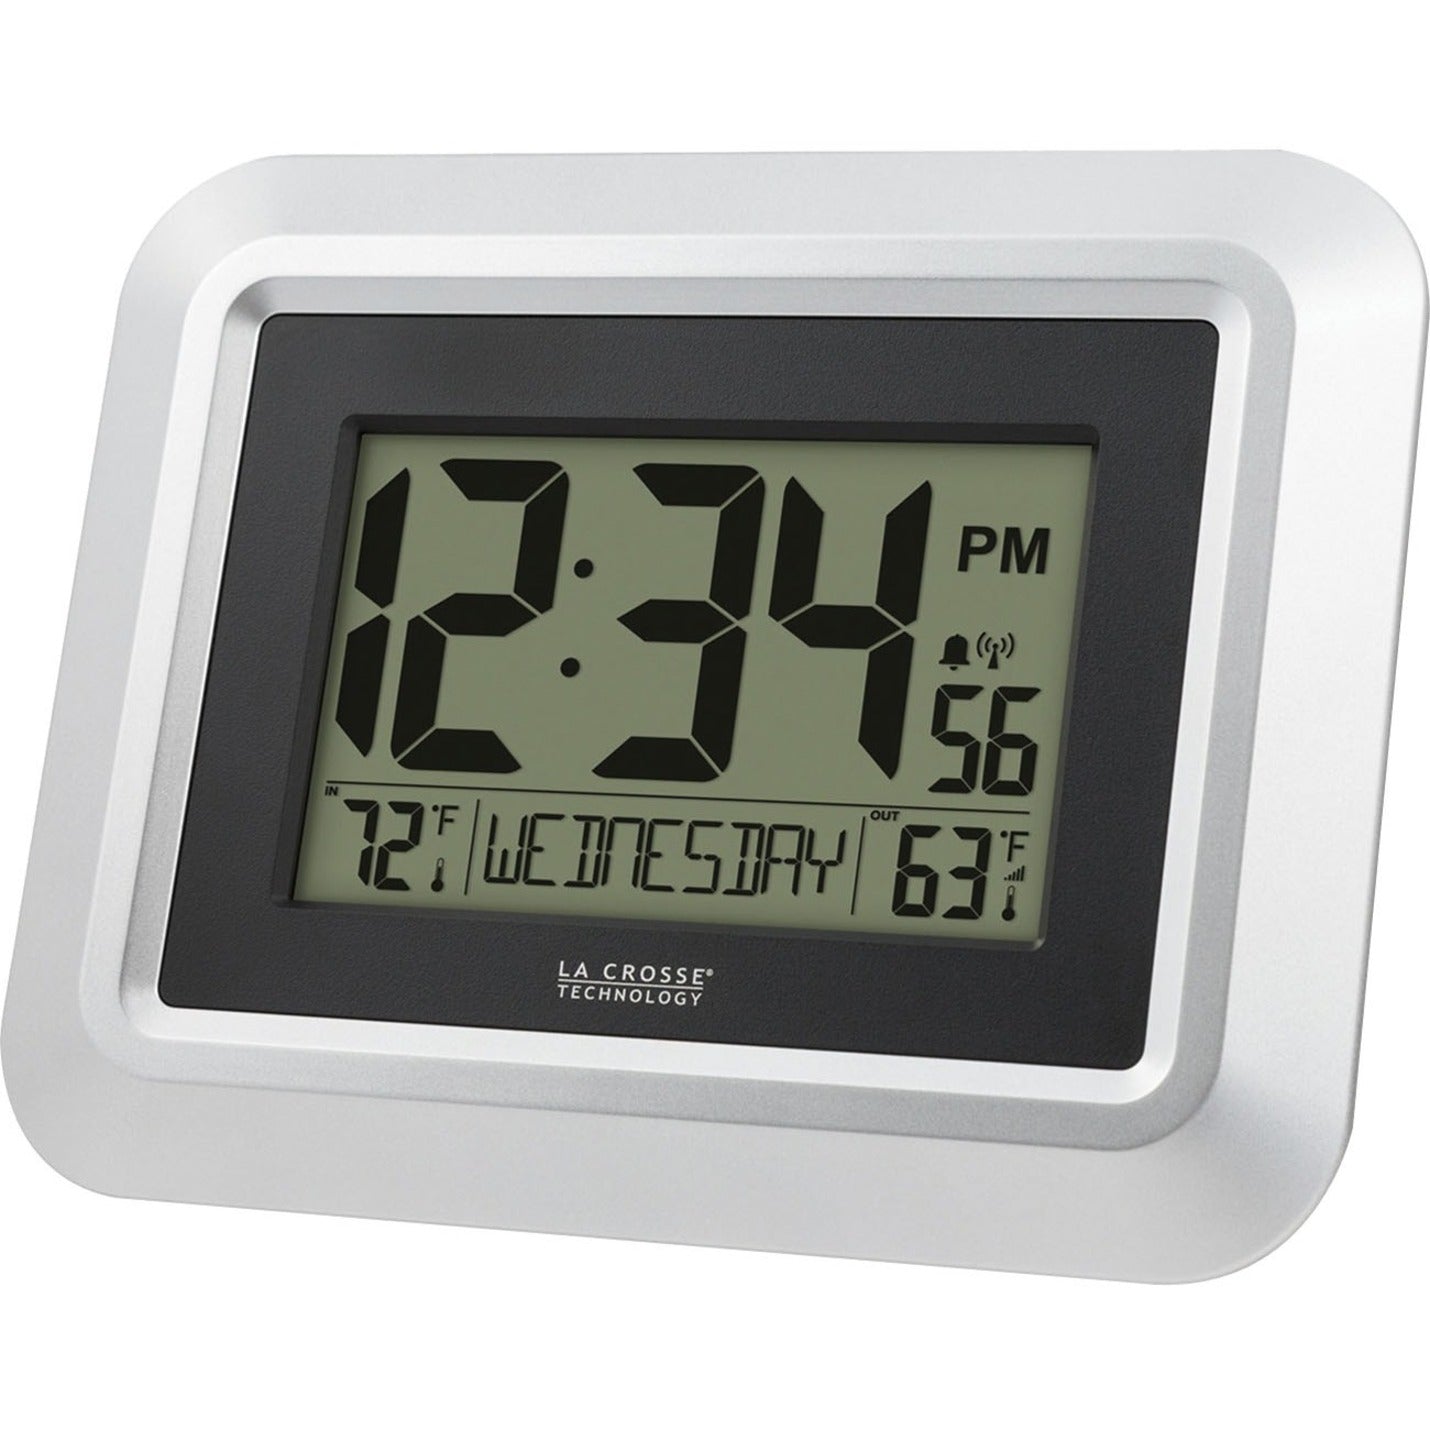 La Crosse Technology 513-1918S-INT Atomic Digital Wall Clock with Indoor/Outdoor Temperature, Temperature Display, 12/24hr Format, Calendar, Daylight Saving, Alarm, Snooze, Wall Mountable, Battery Indicator